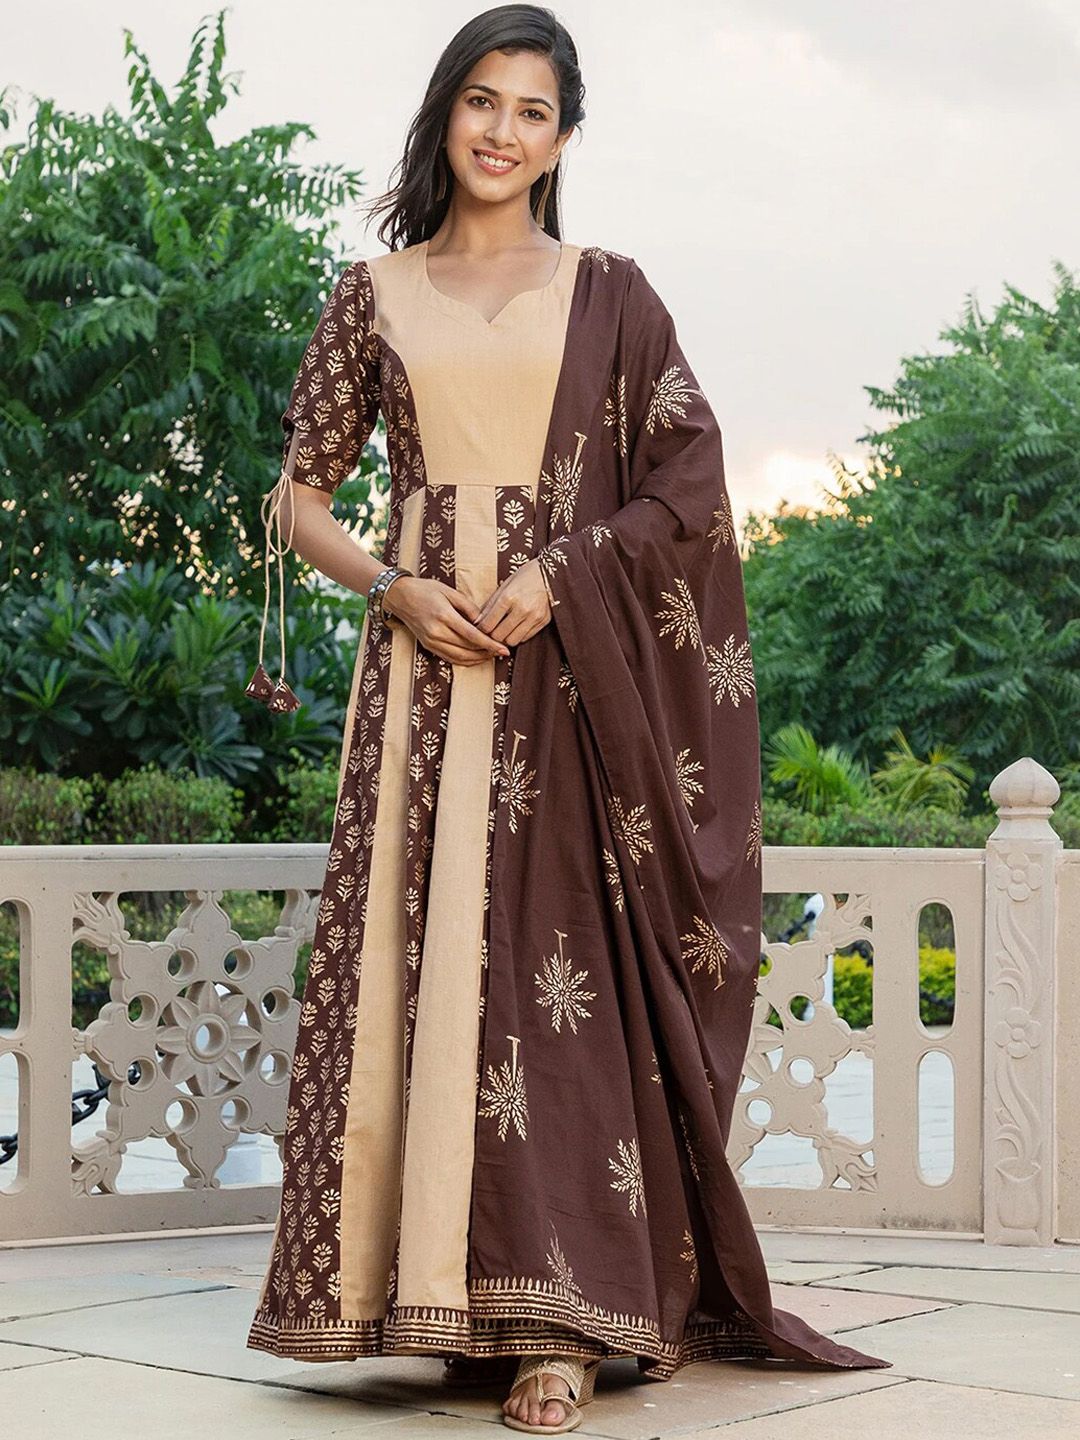 Ambraee Brown & Beige Ethnic Motifs Ethnic Maxi Dress Price in India